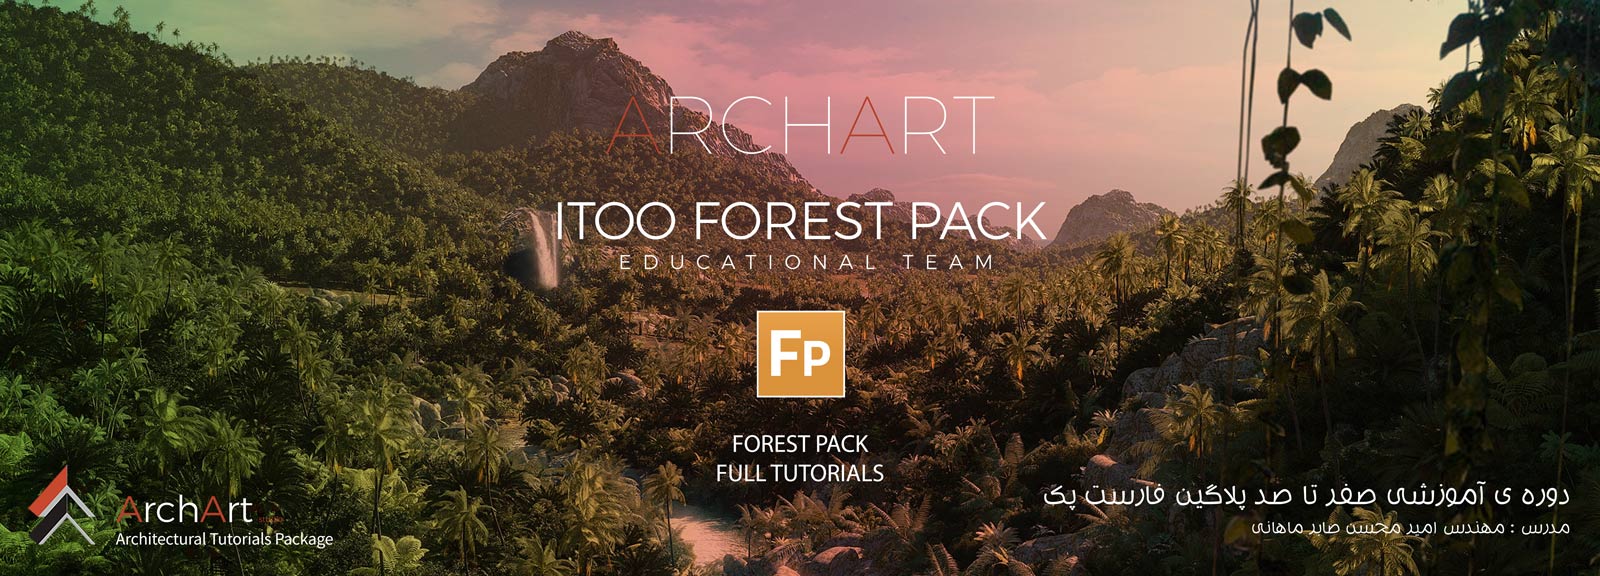 جلسه ی چهارم پلاگین فارست پک - Itoo Forest Pack